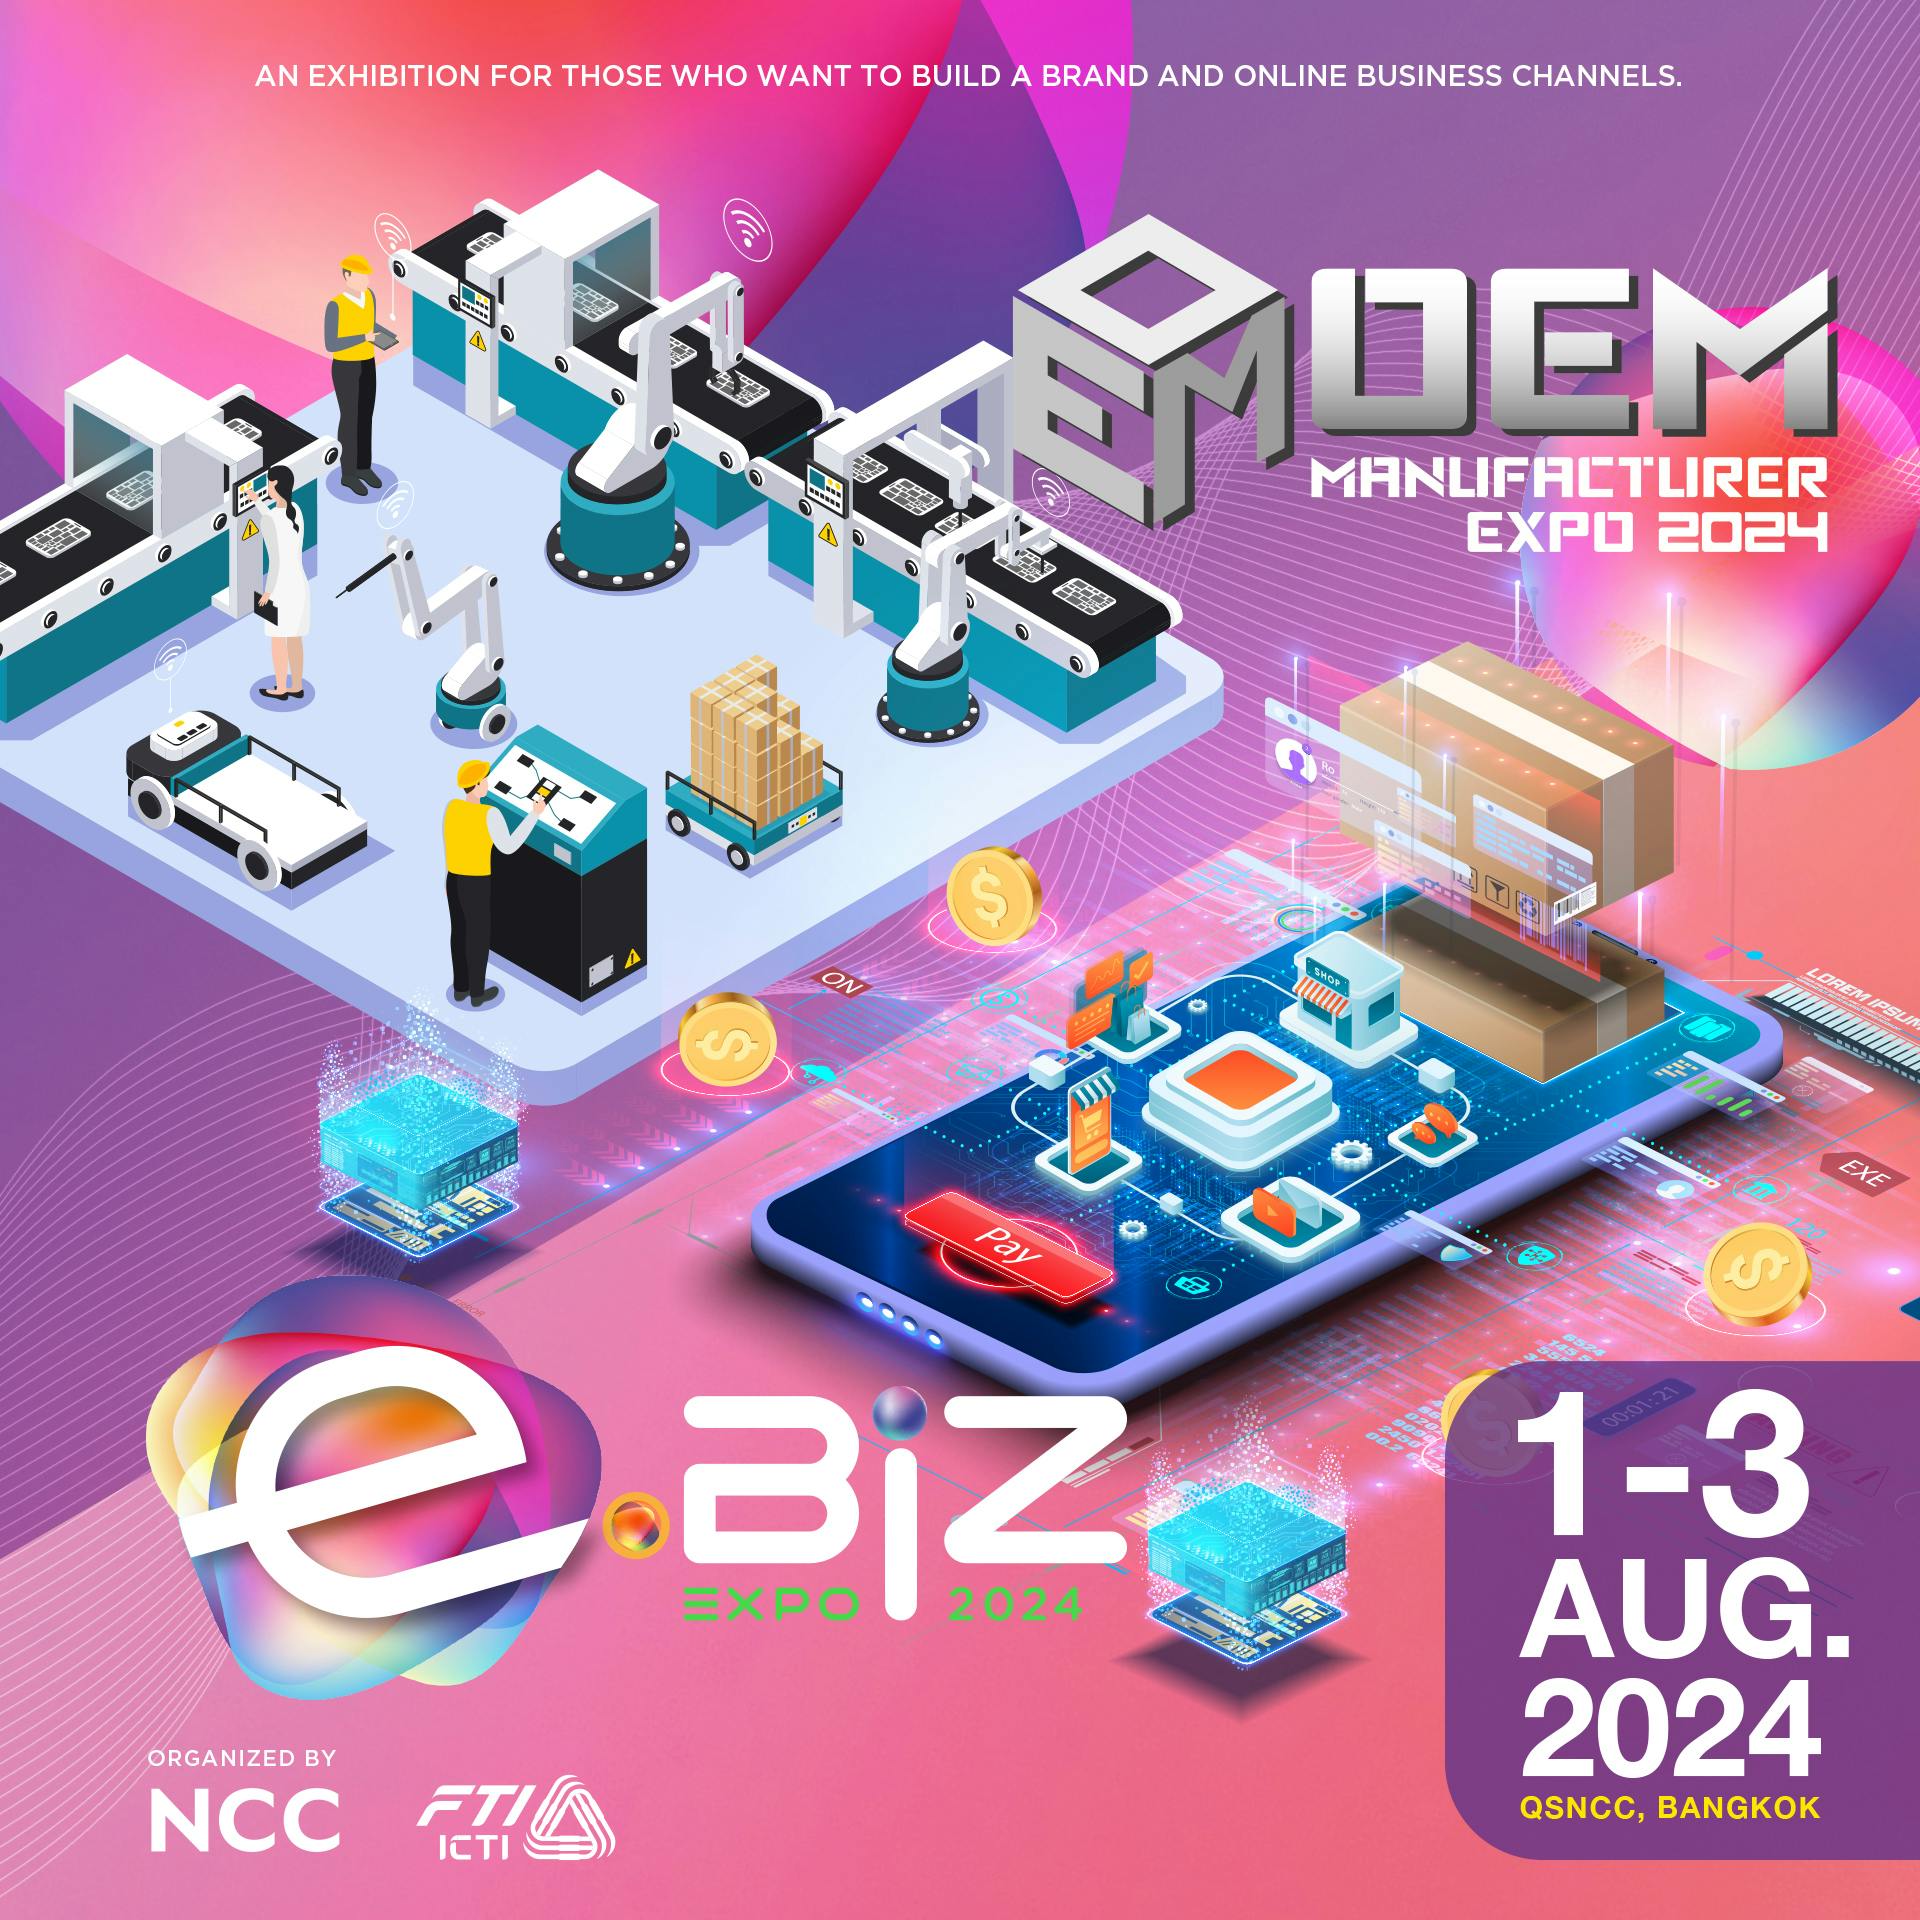 OEM Manufacturer & e-Biz Expo